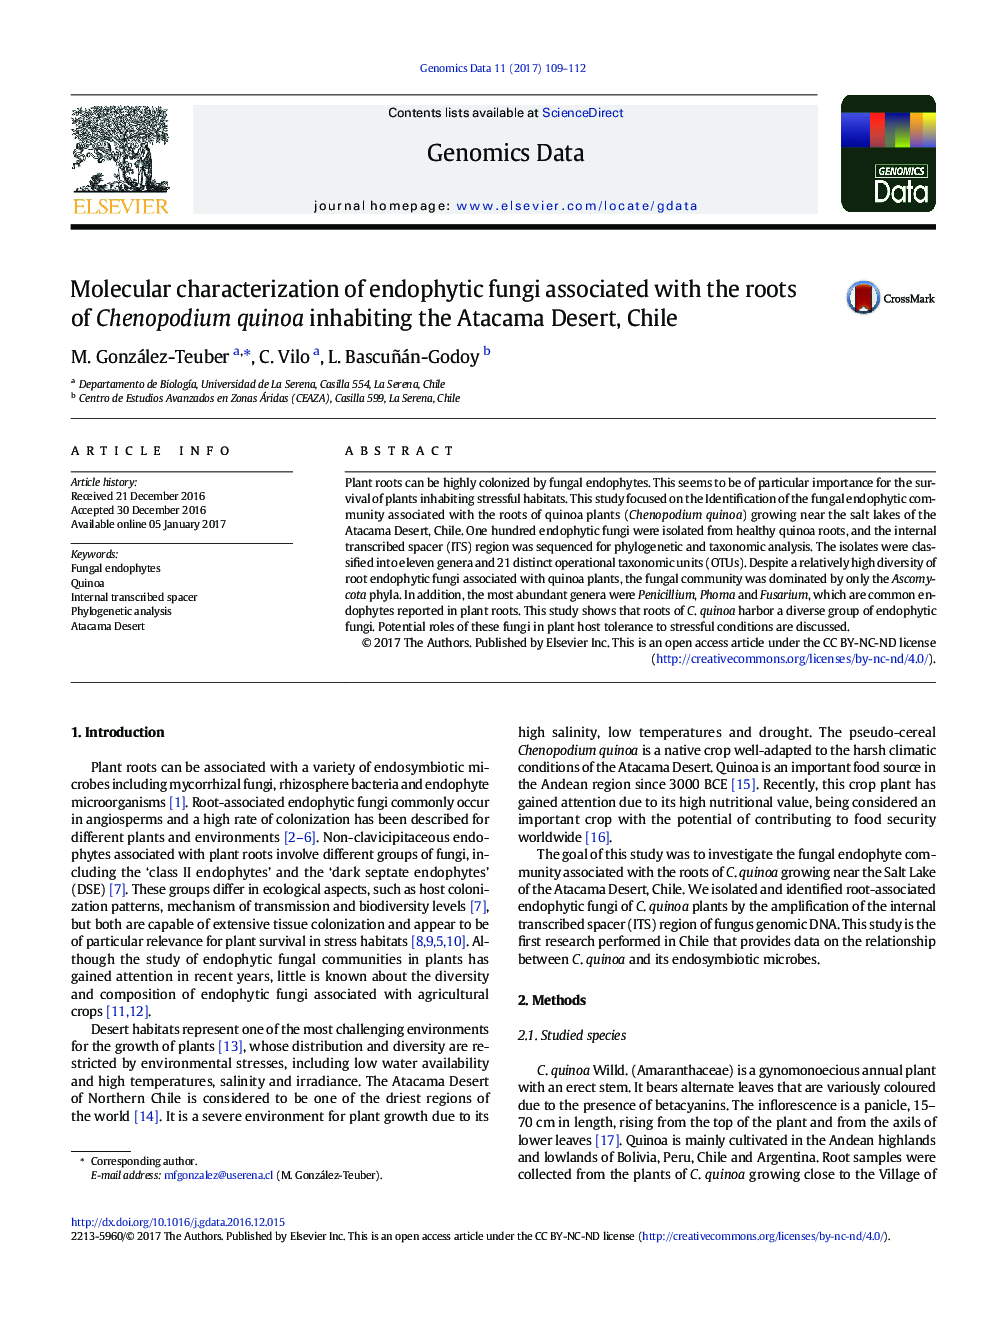 Molecular characterization of endophytic fungi associated with the roots of Chenopodium quinoa inhabiting the Atacama Desert, Chile